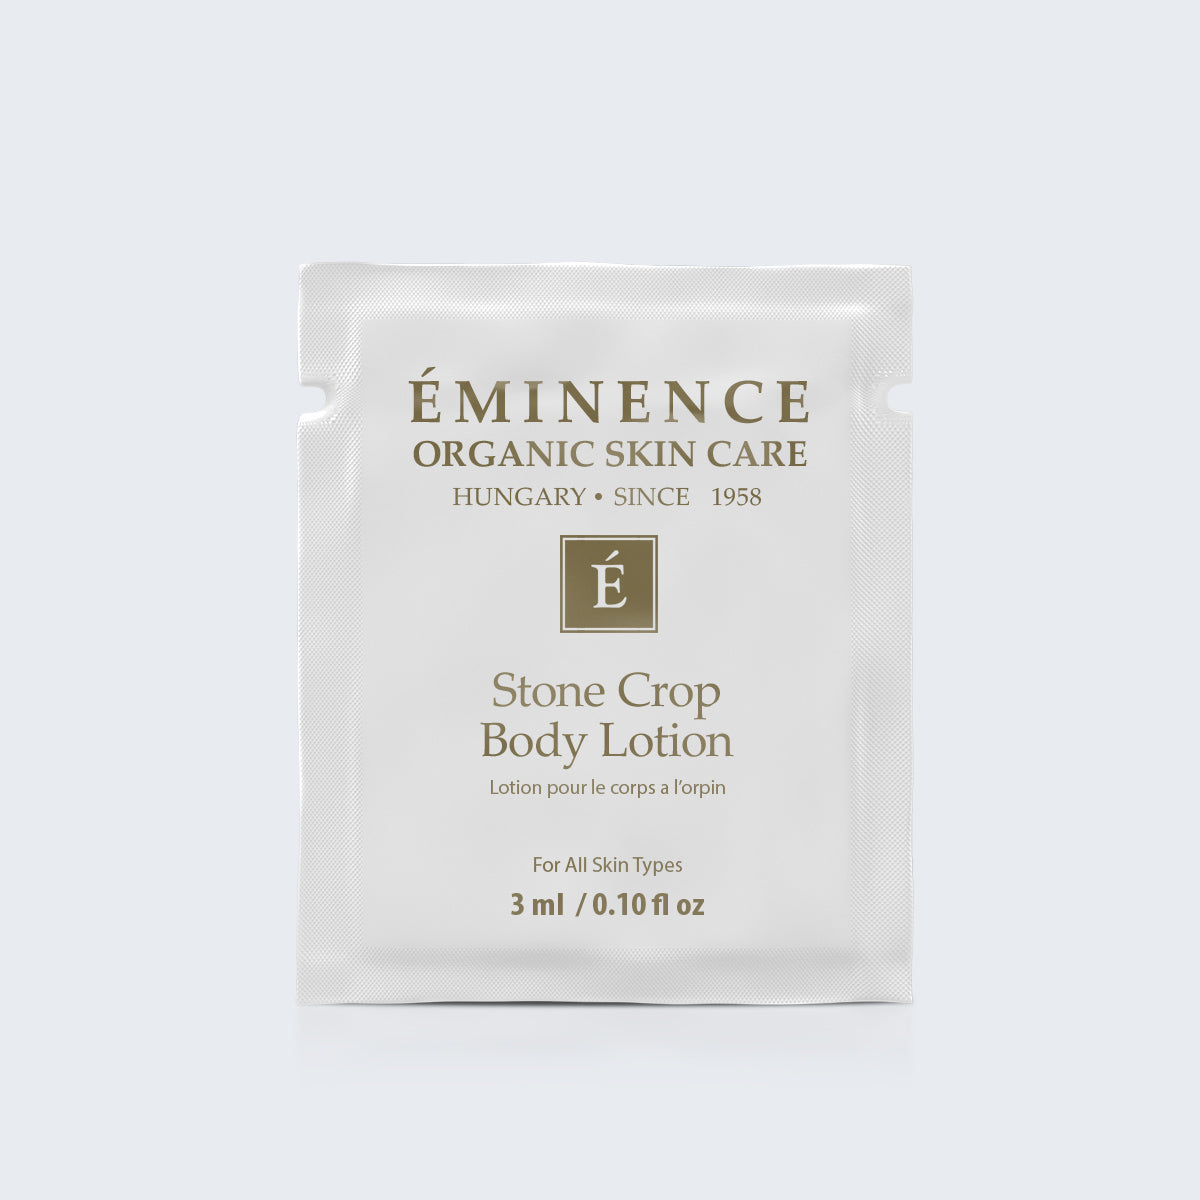 Eminence Organics Stone Crop Body Lotion Card Sample